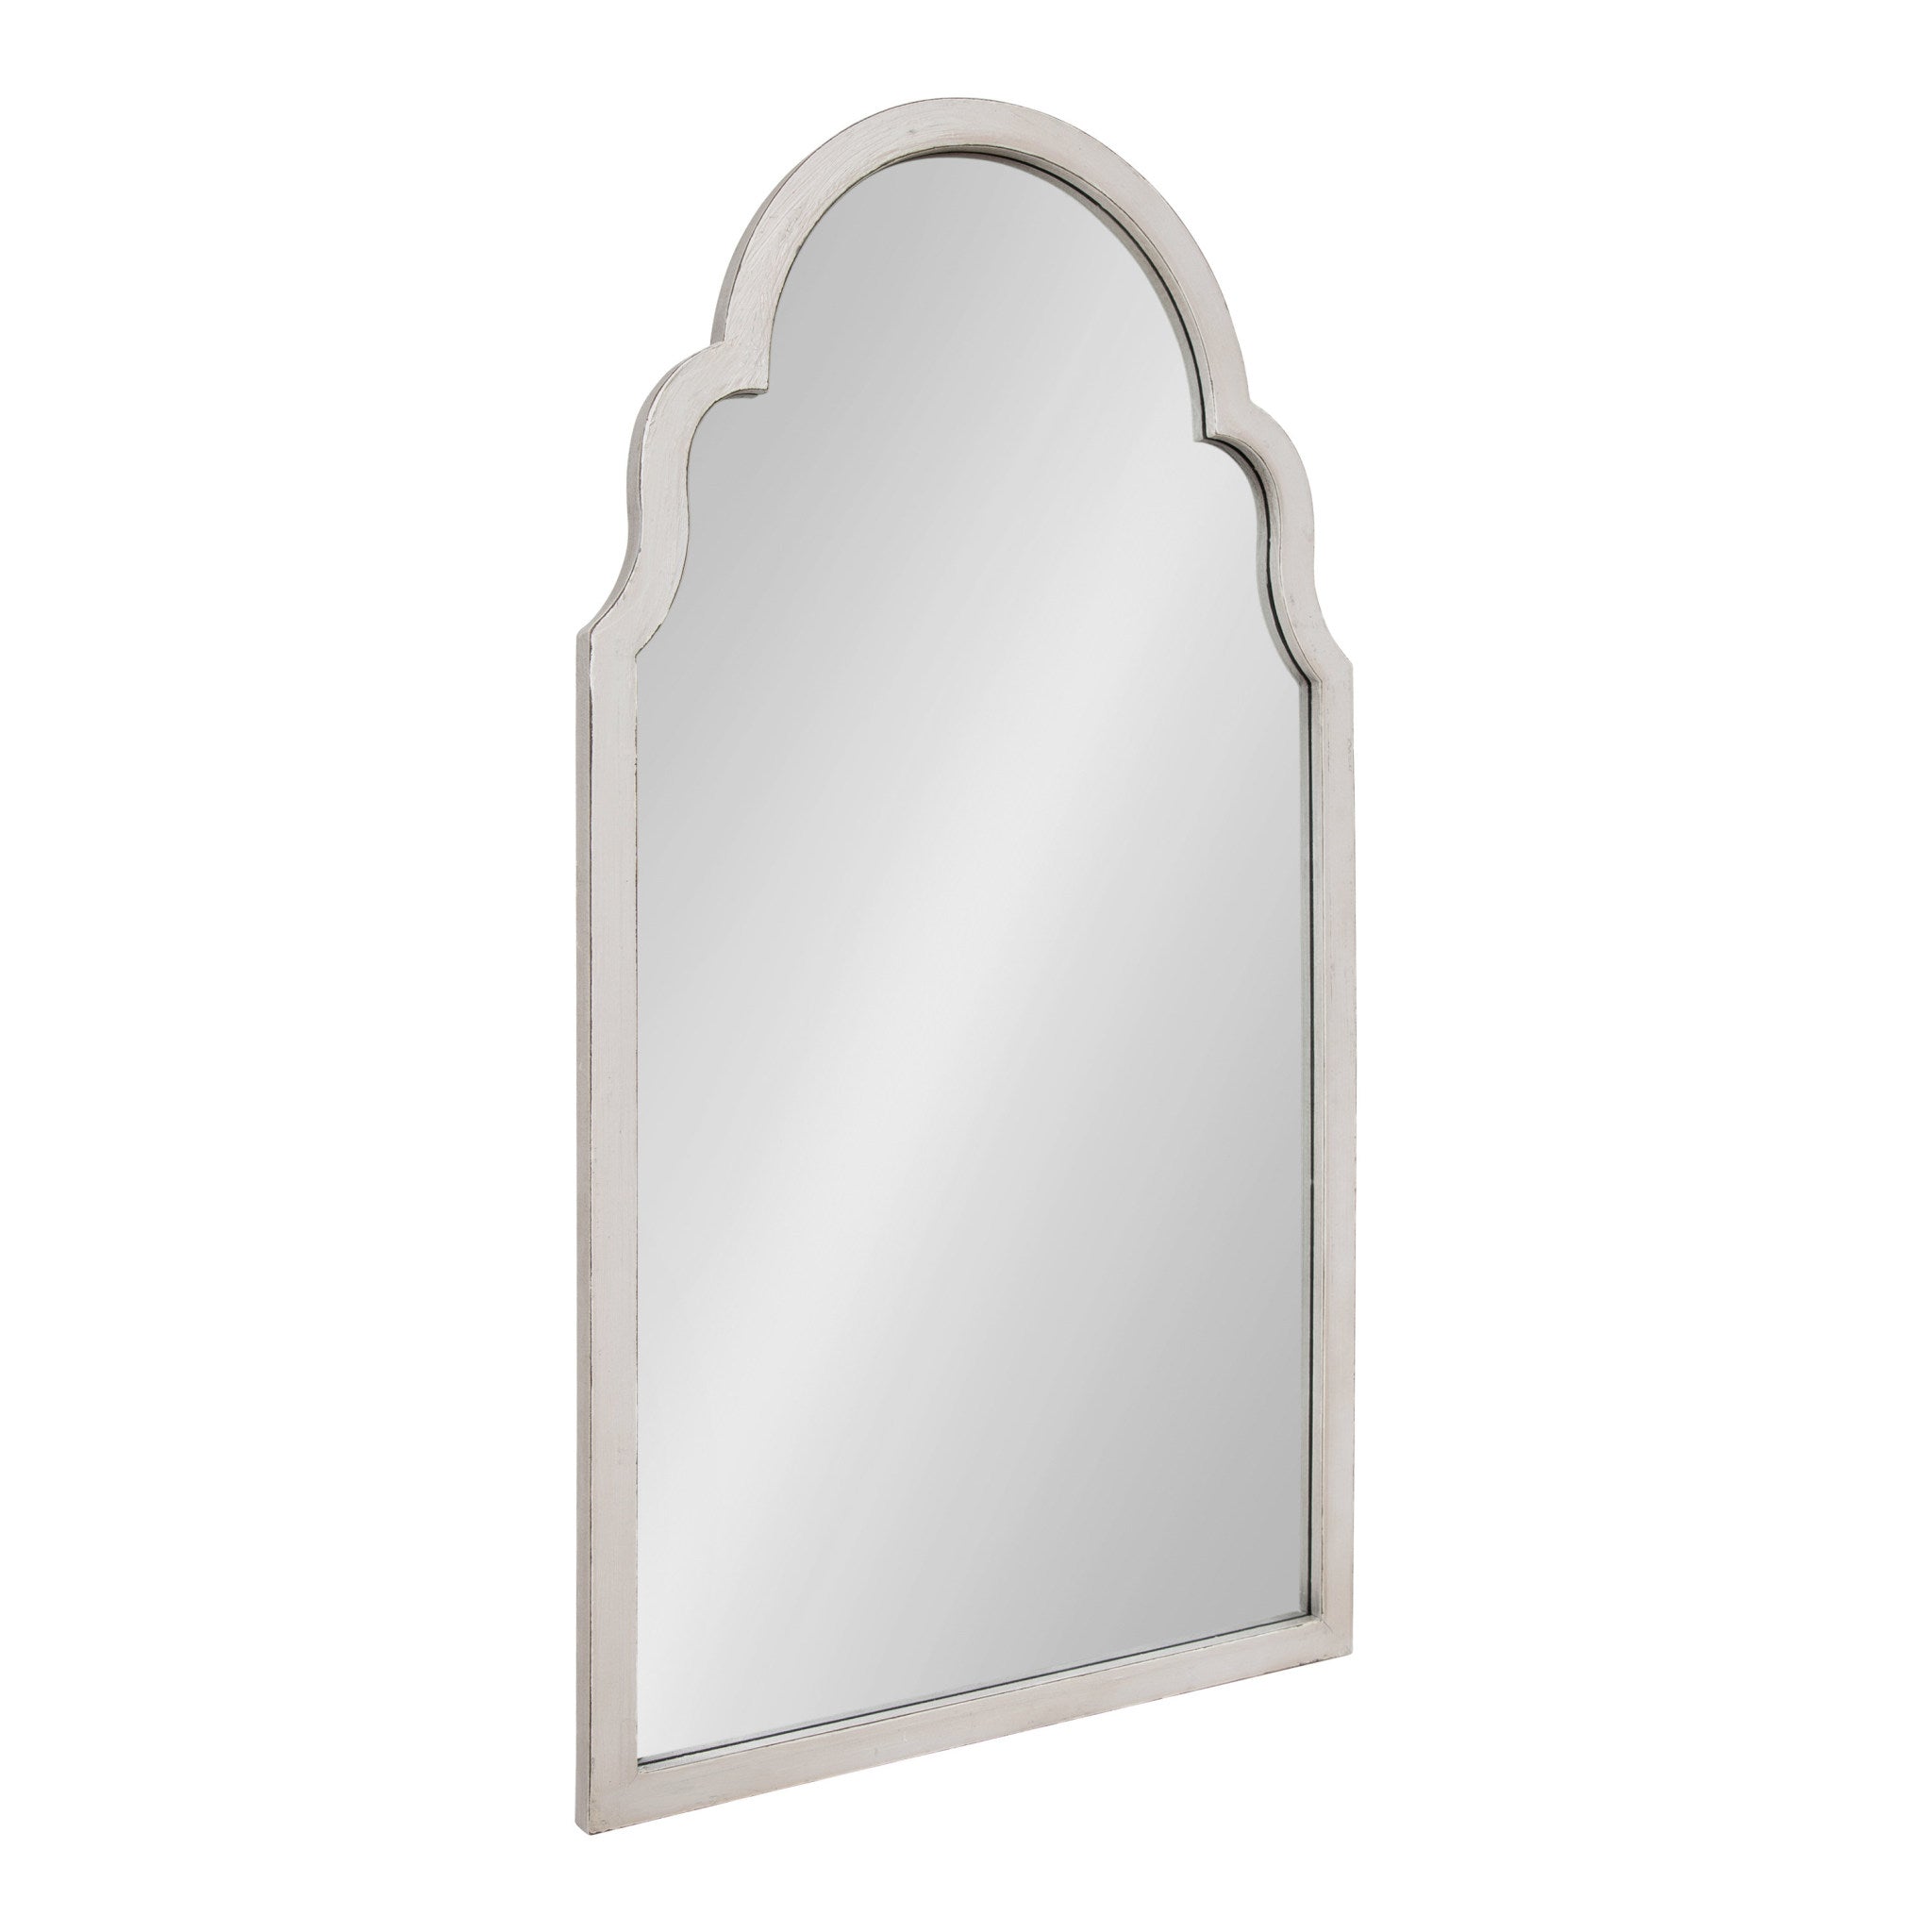 Damara Moroccan Style Arch Mirror